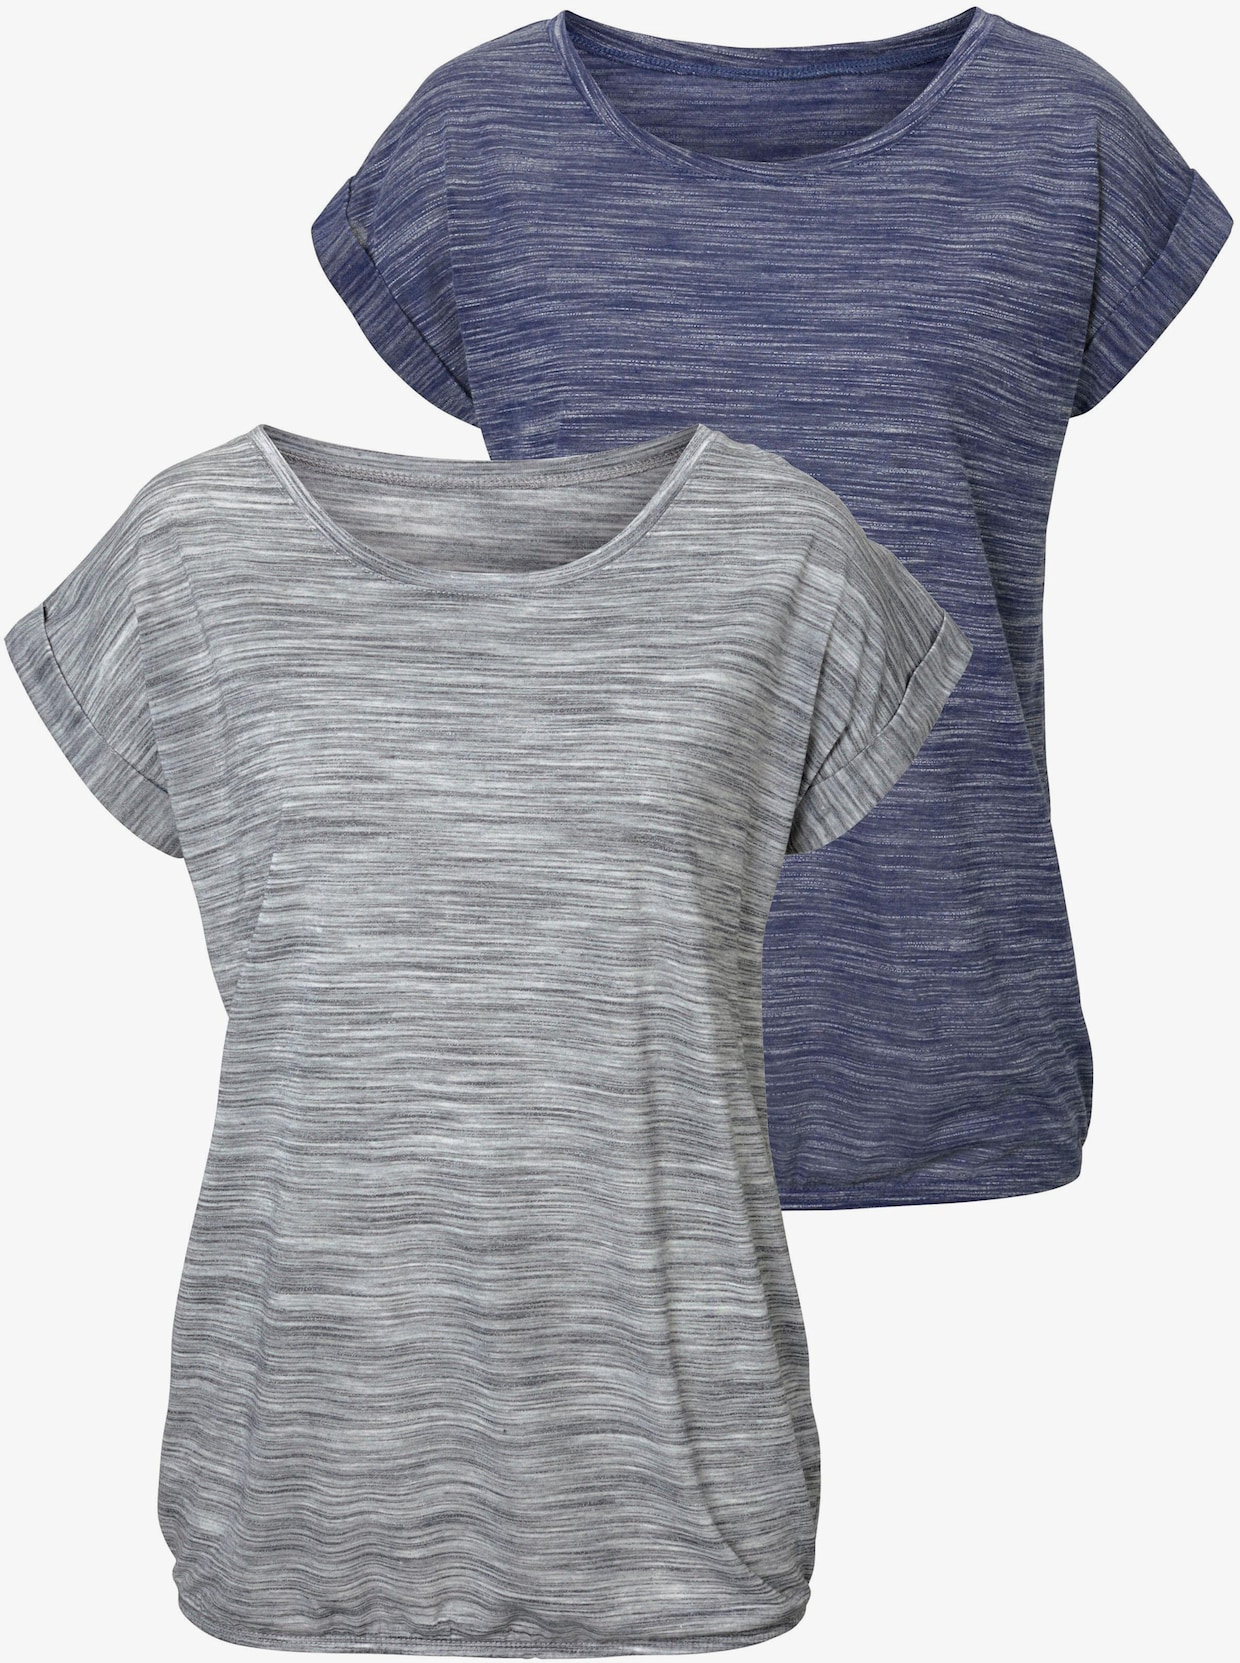 Beachtime T-shirt - bleu chiné, gris chiné